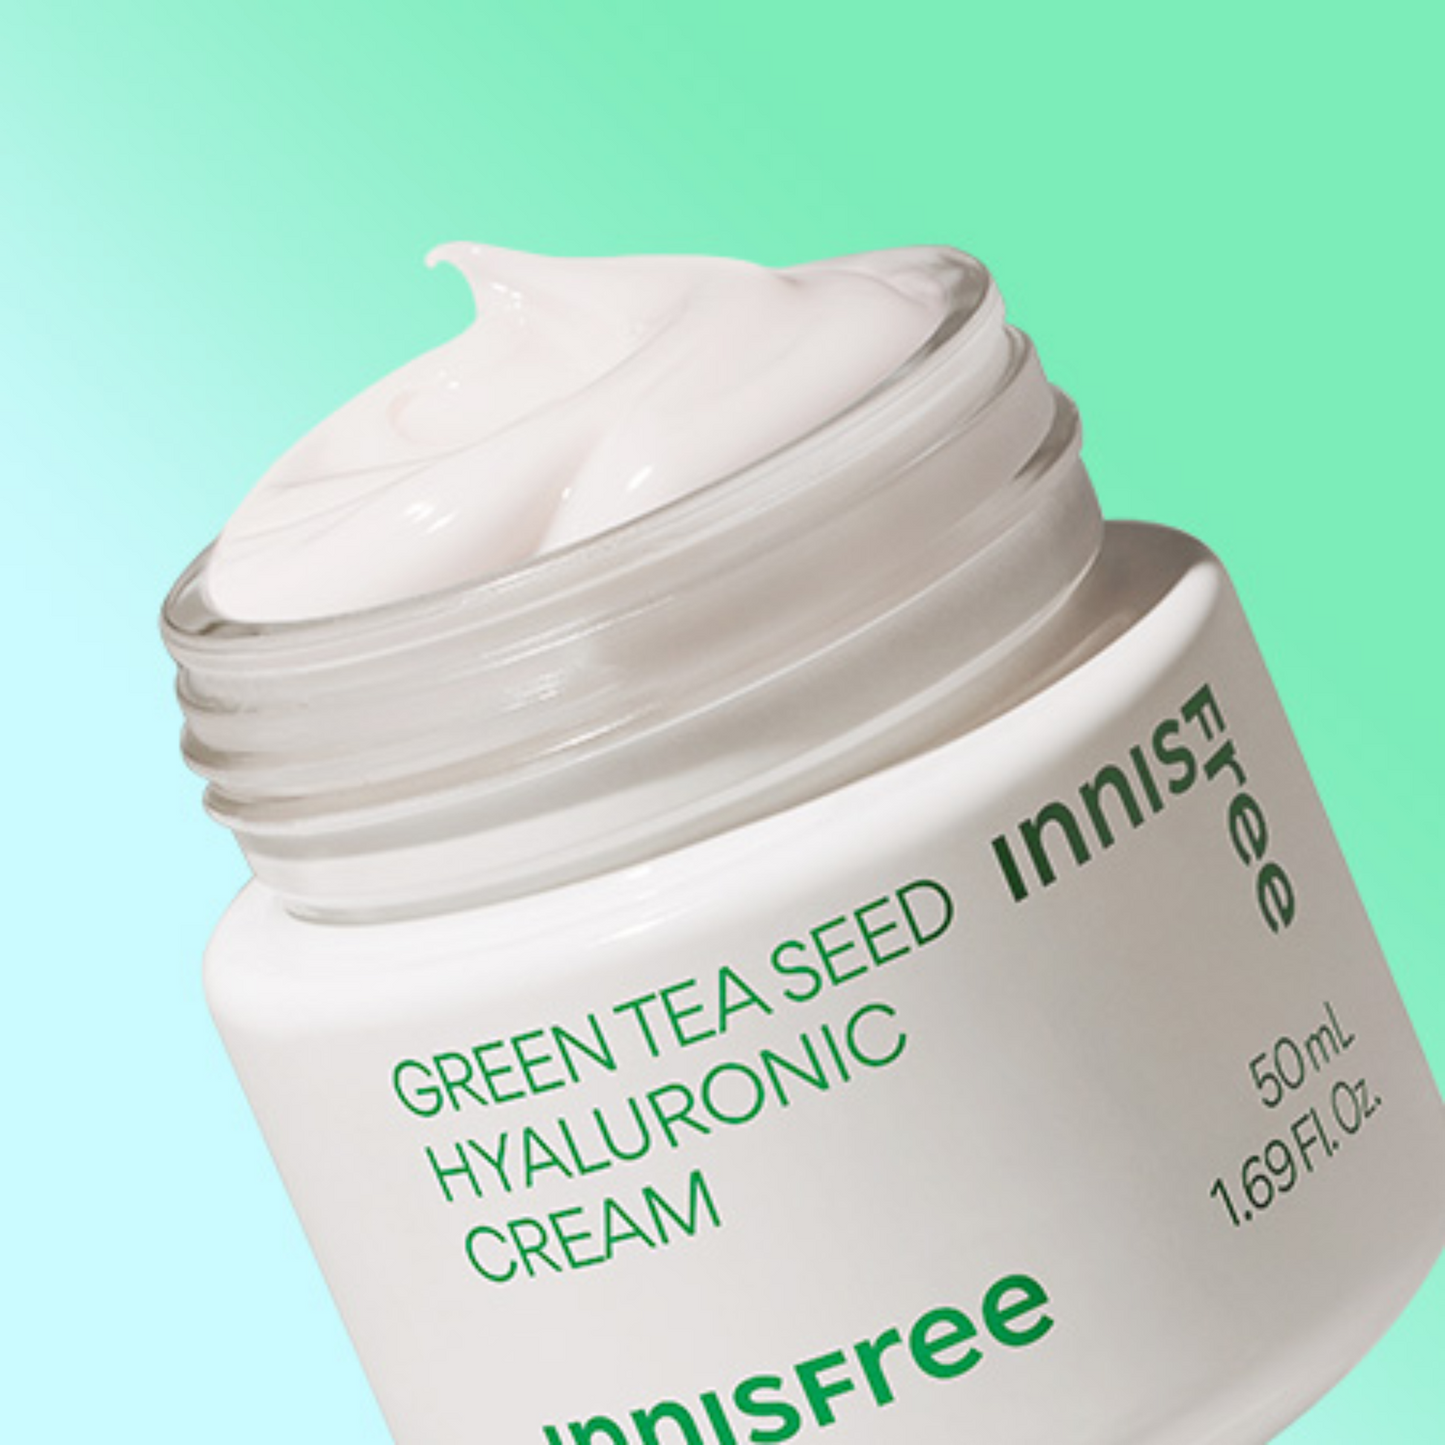 Innisfree Green Tea Seed Hyaluronic Cream